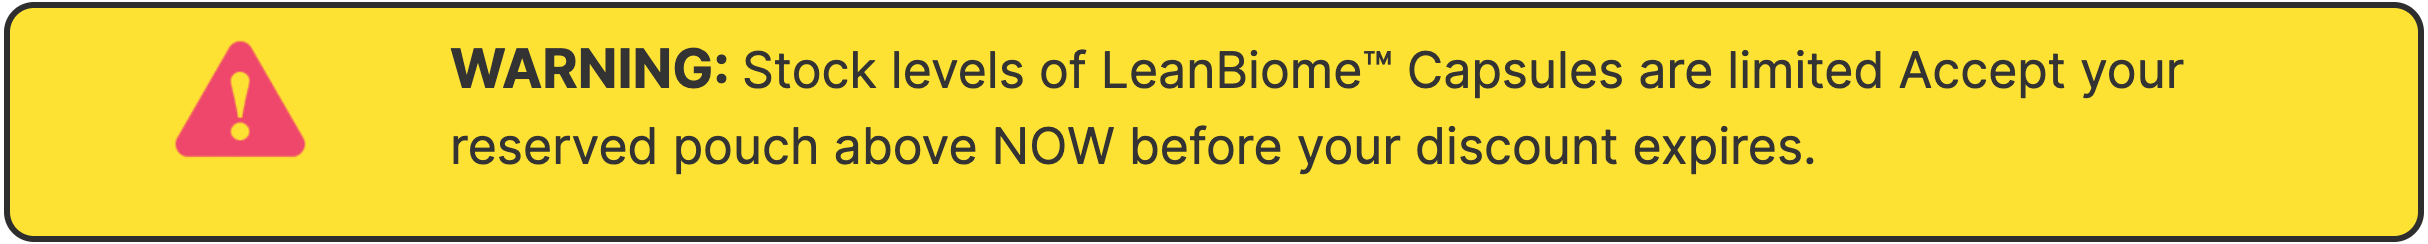 LeanBiome - WARNING